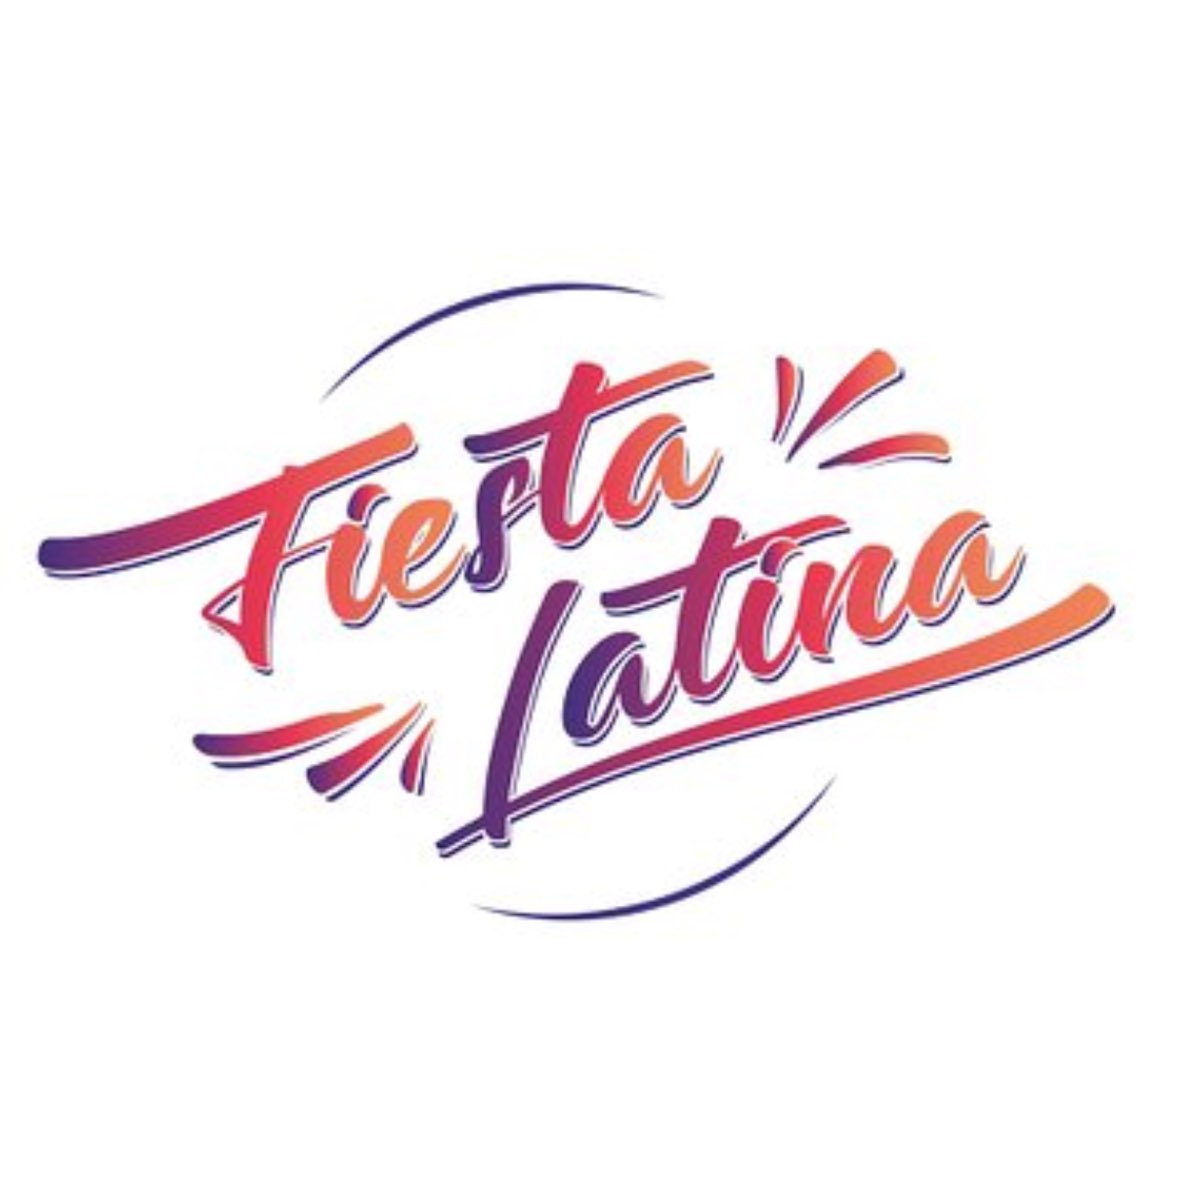 Antagonista patrulla Furioso Fiesta Latina (feat. Boldan) - Single by Sashi on Apple Music